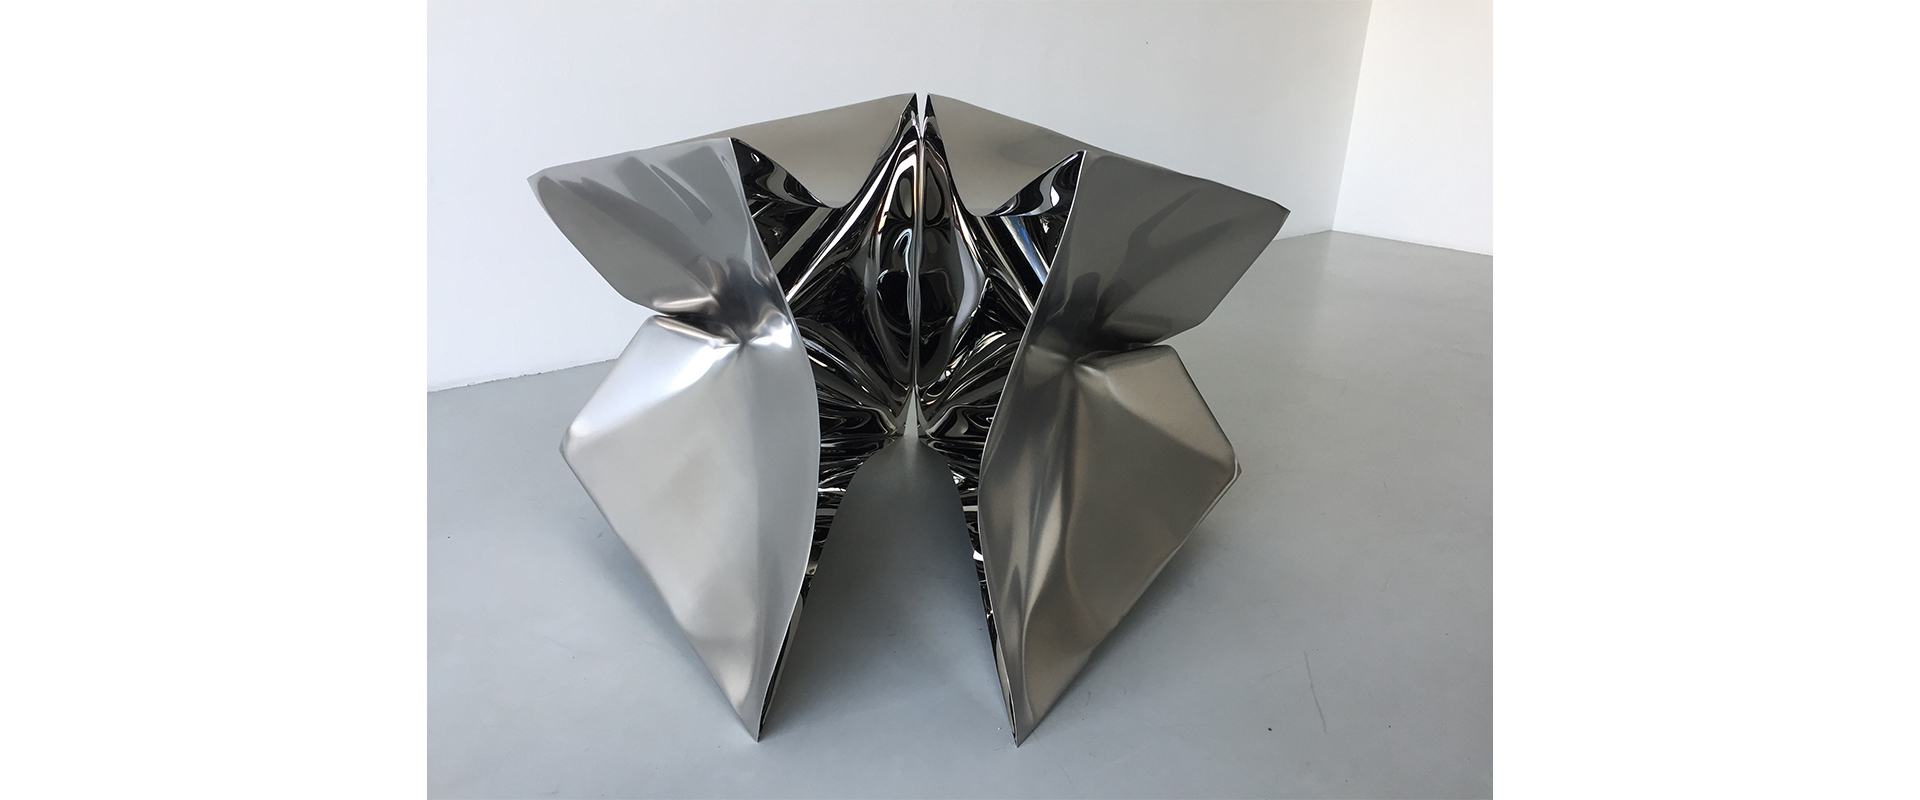 Ewerdt Hilgemann, "cracked cube" – 2020, Edelstahl, 75 x 128 x 97 cm